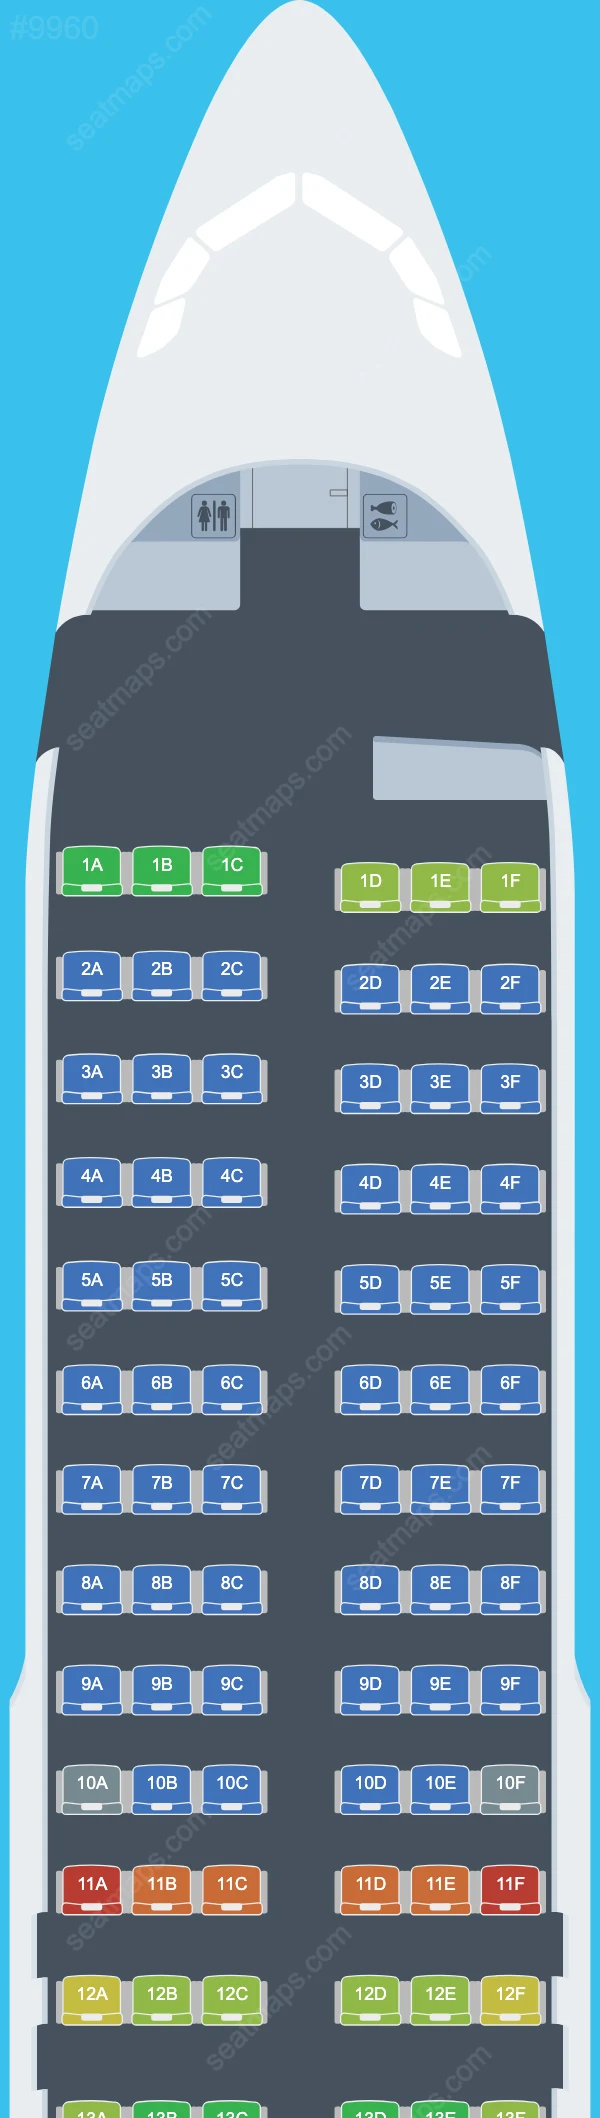 Qantaslink Airbus A320 Seat Maps A320-200 V.1